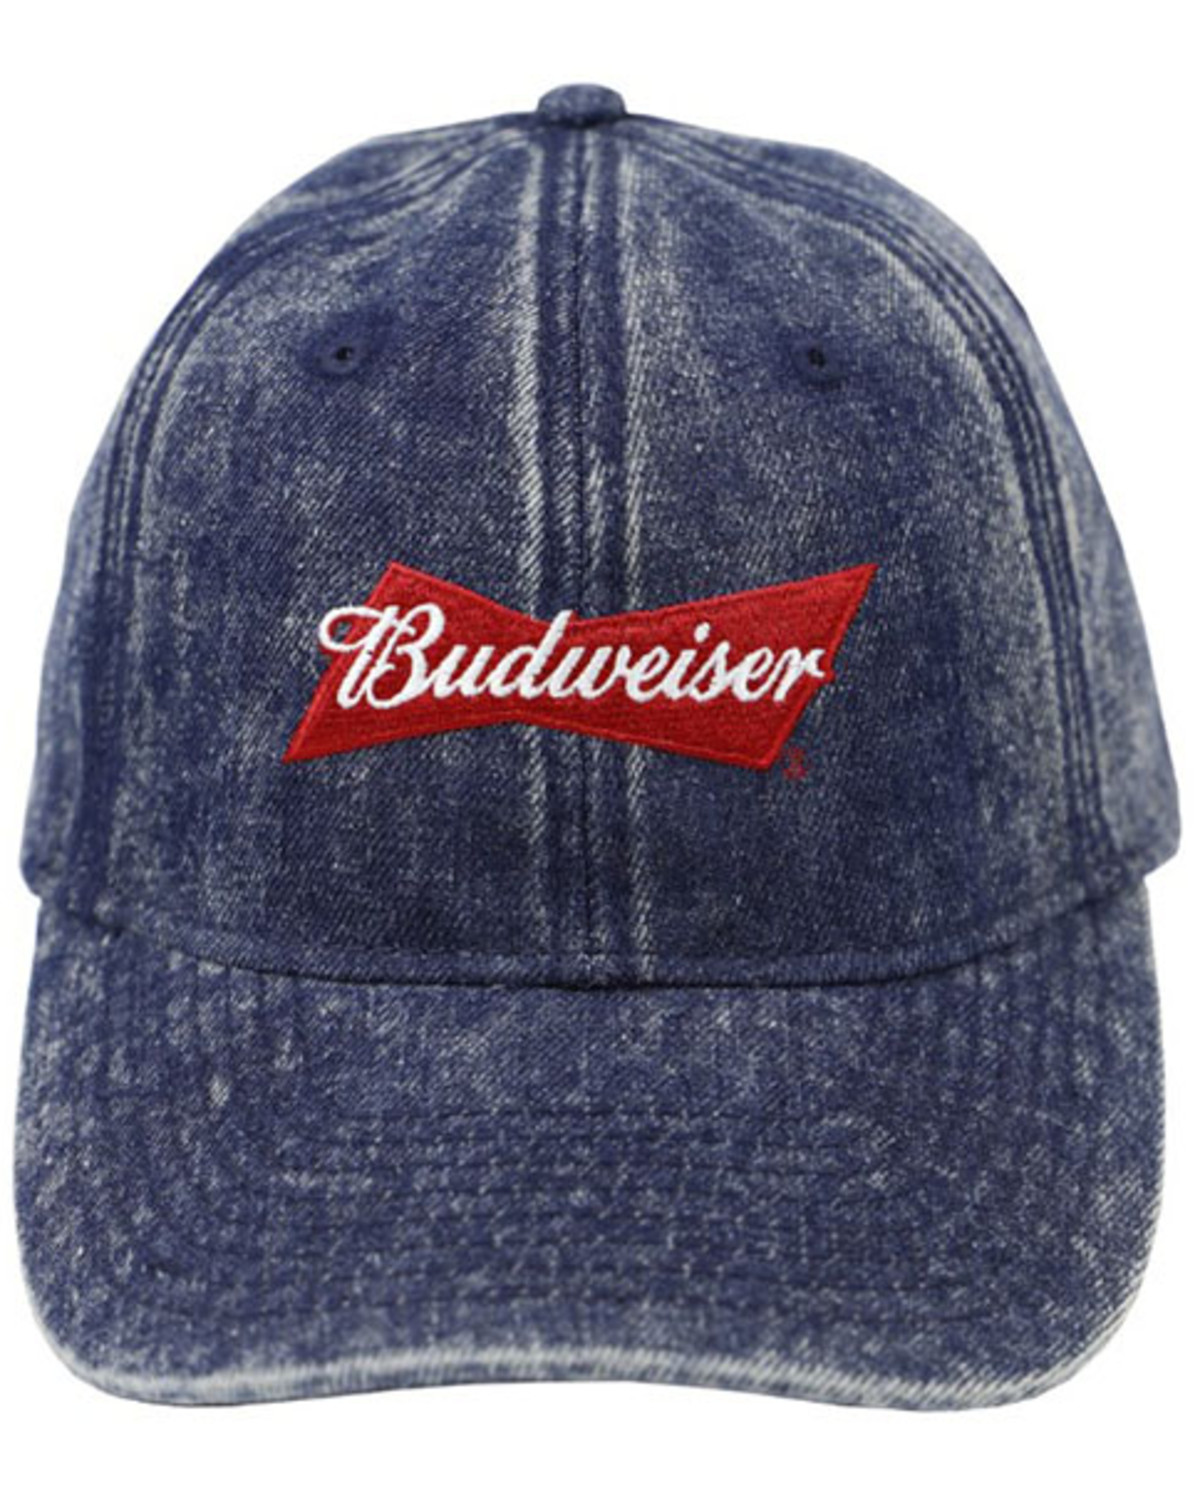 Navy Blue with Red Logo Budweiser Baseball Cap